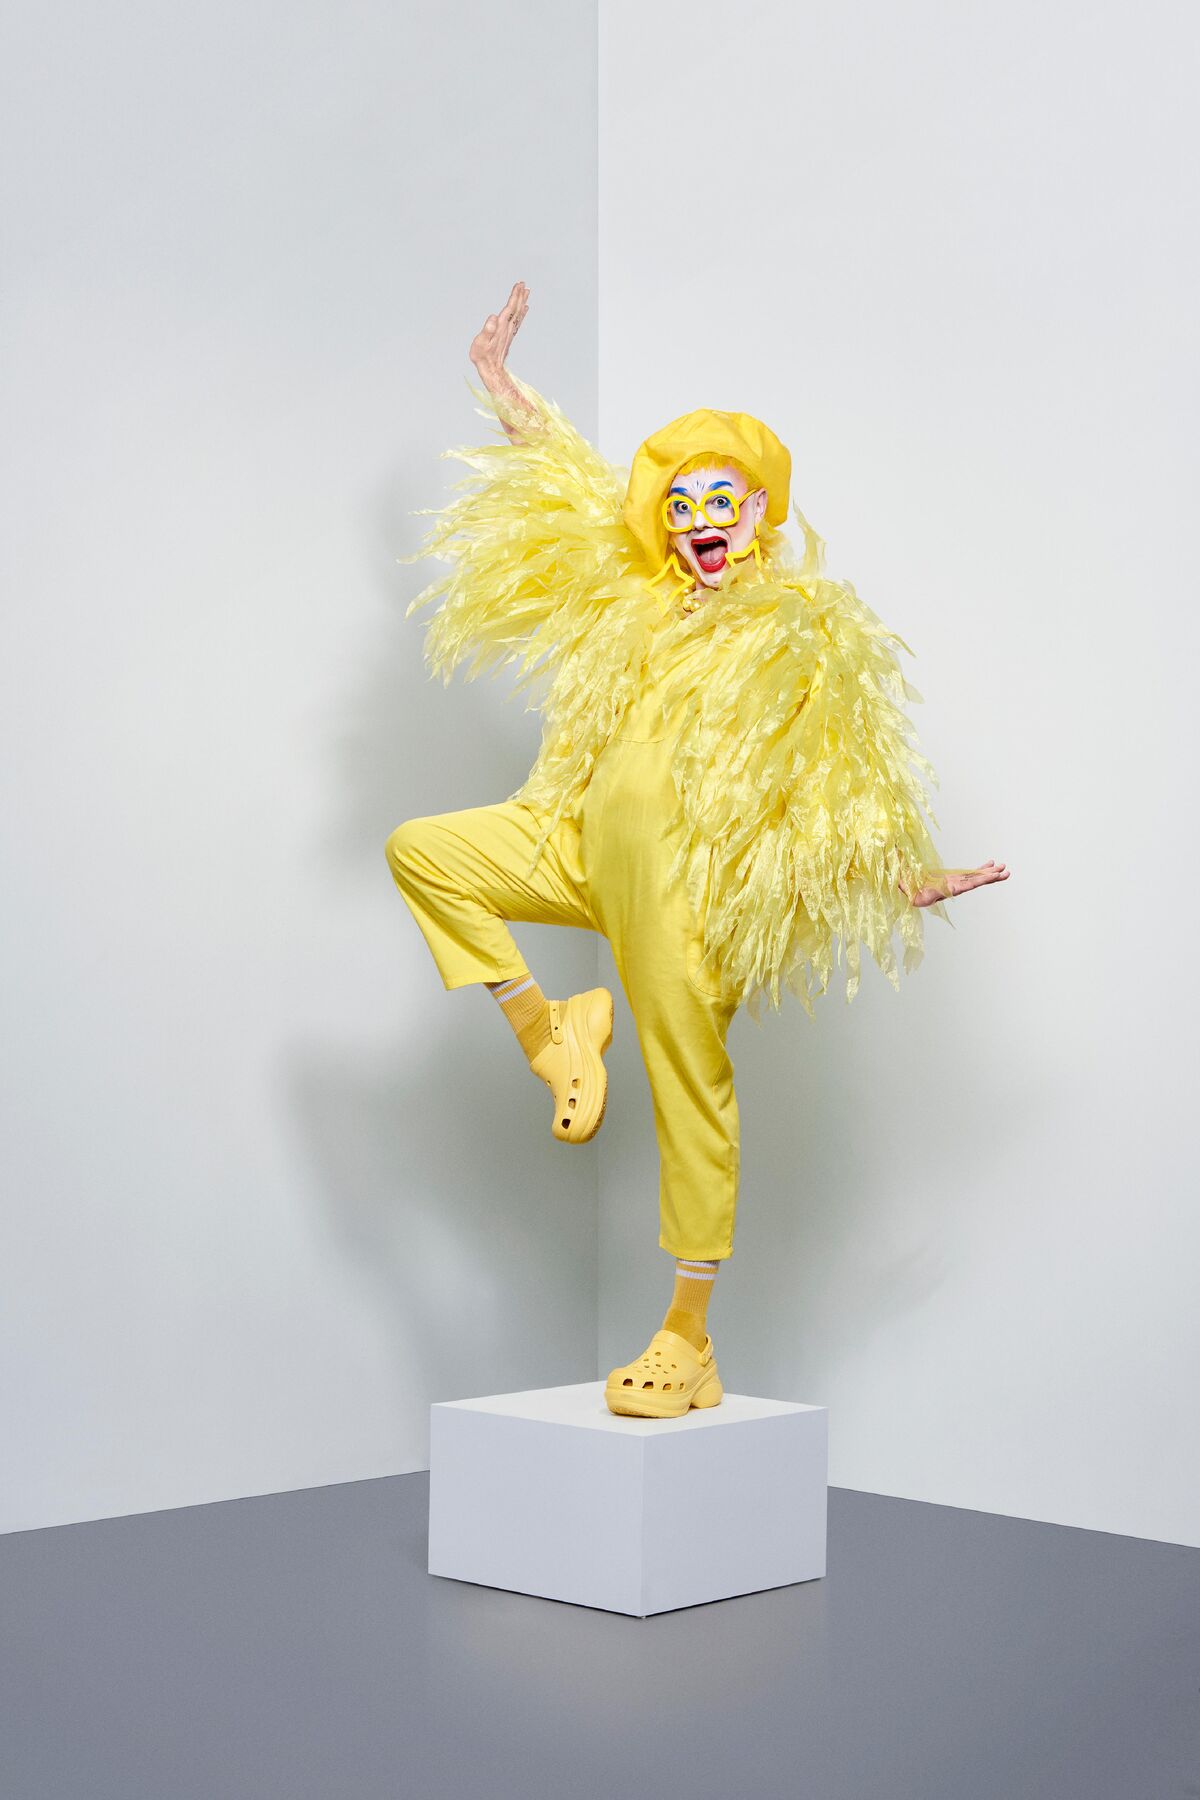 Lemon (drag queen) - Wikipedia